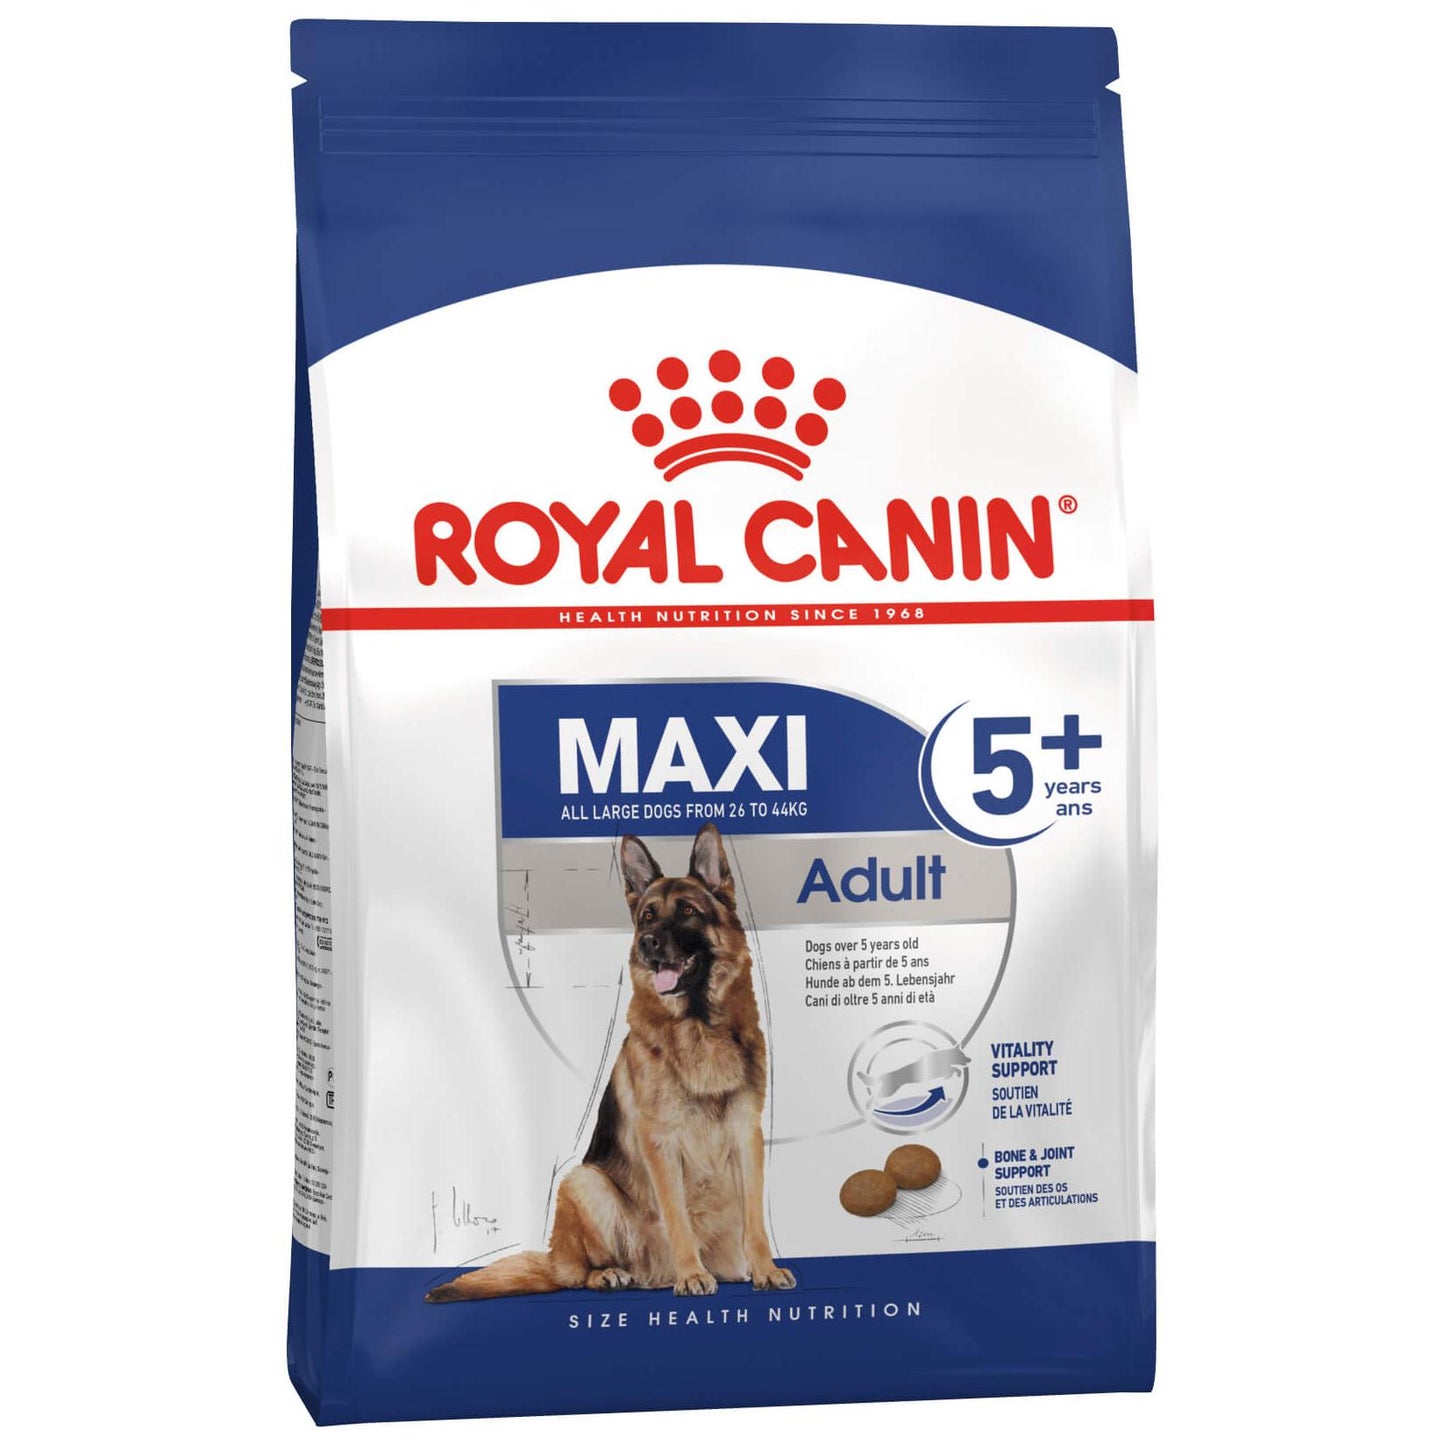 Royal Canin Maxi 5+ Dry Dog Food